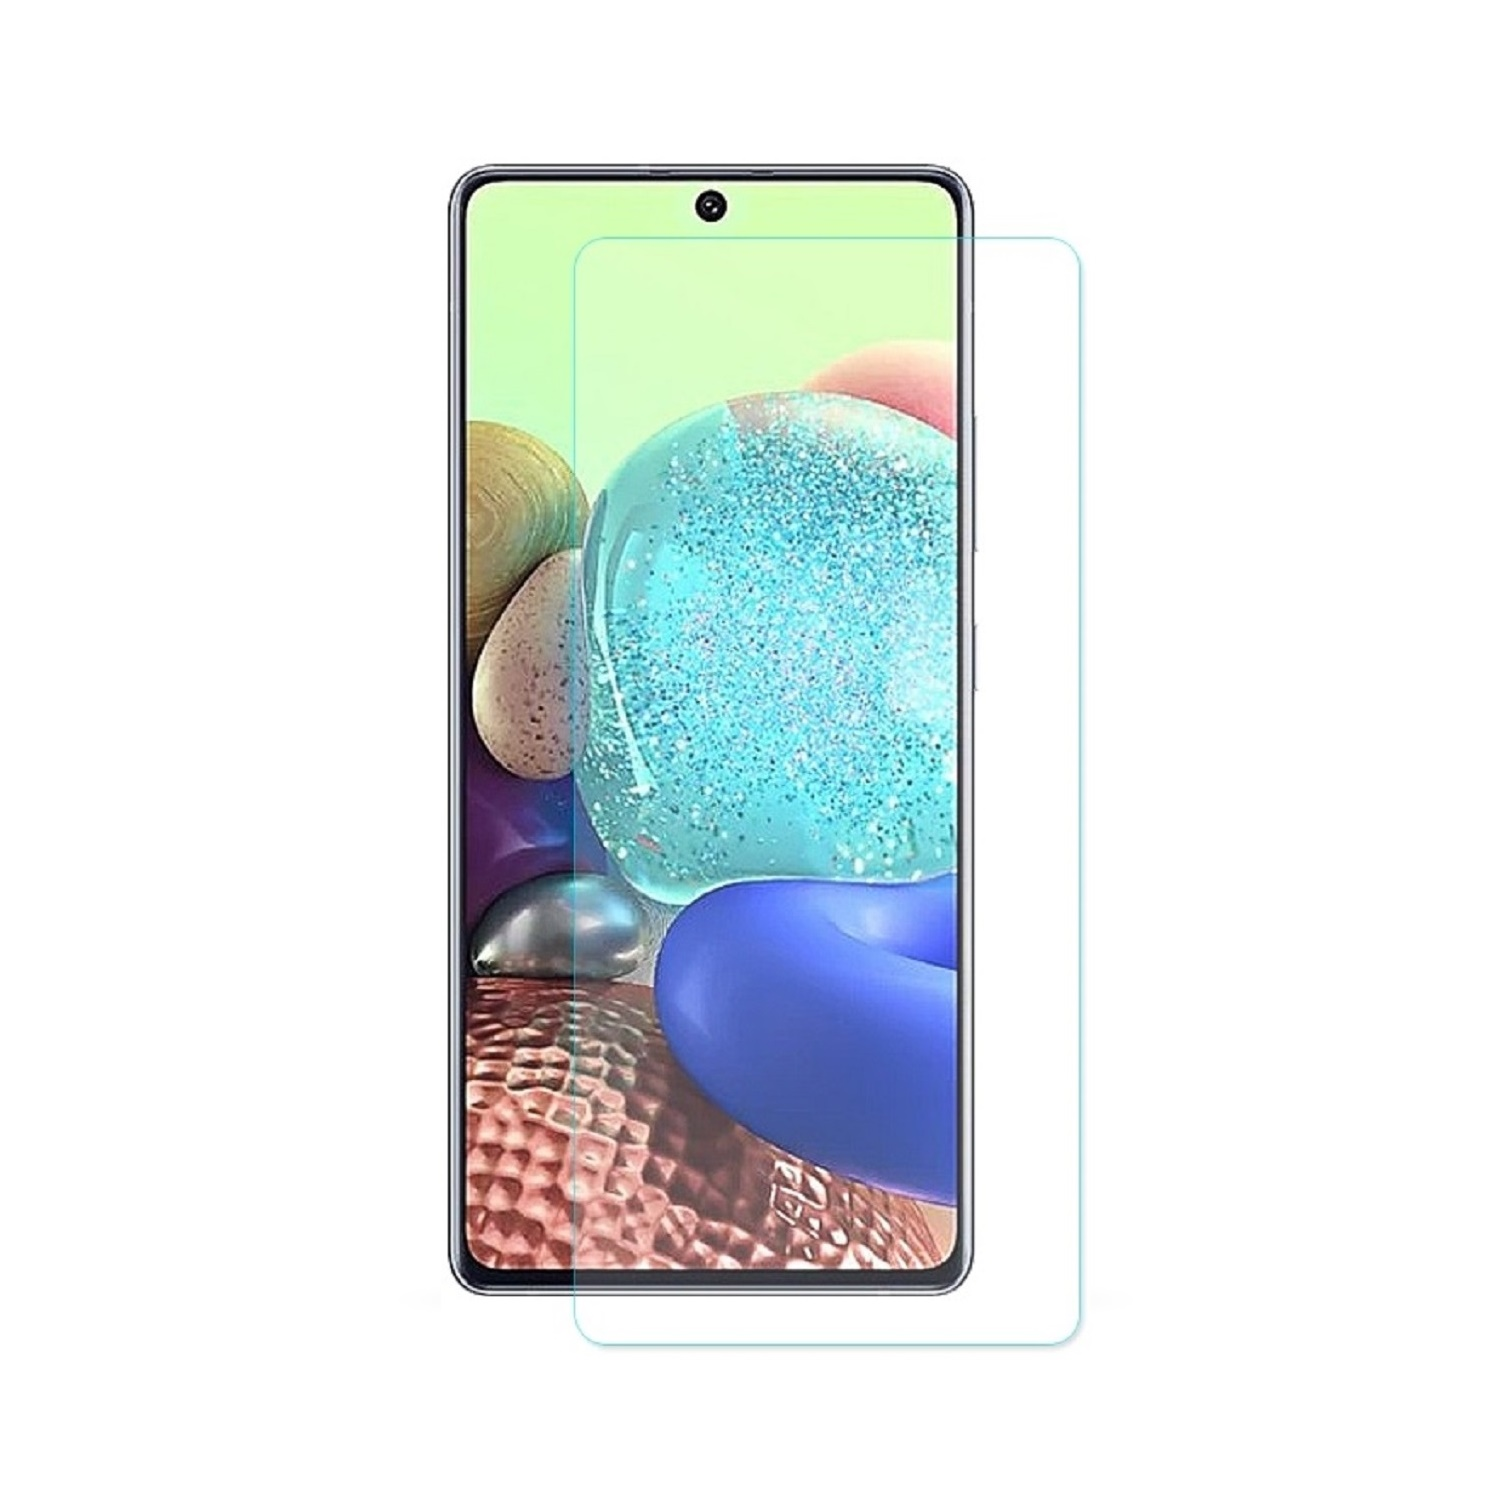 9H 2x KLAR PROTECTORKING HD Samsung Galaxy A71) Hartglas Displayschutzfolie(für